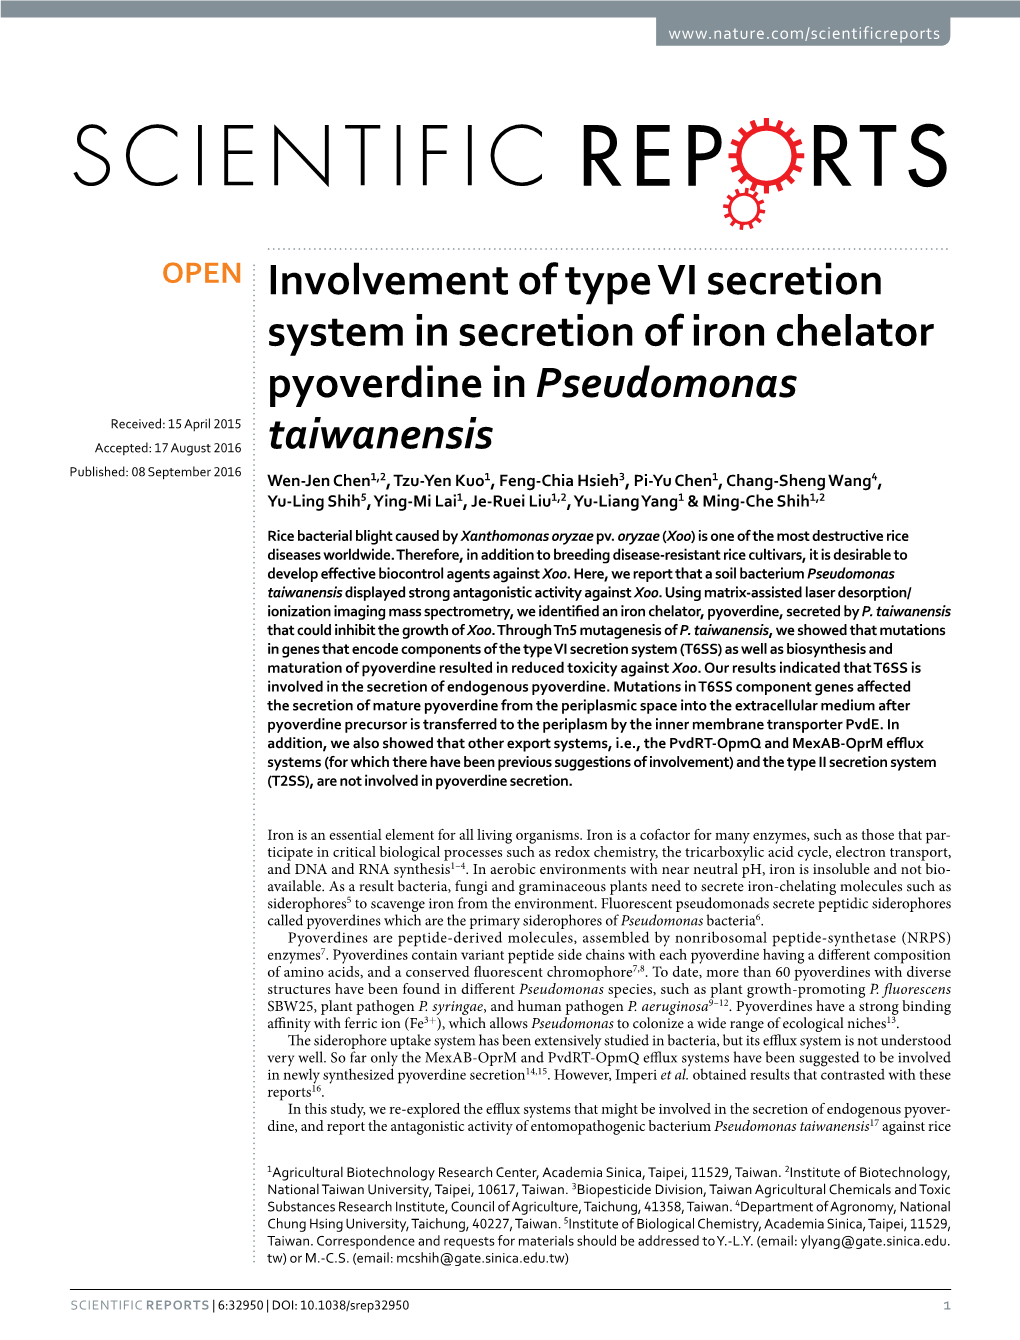 Involvement of Type VI Secretion System in Secretion of Iron Chelator